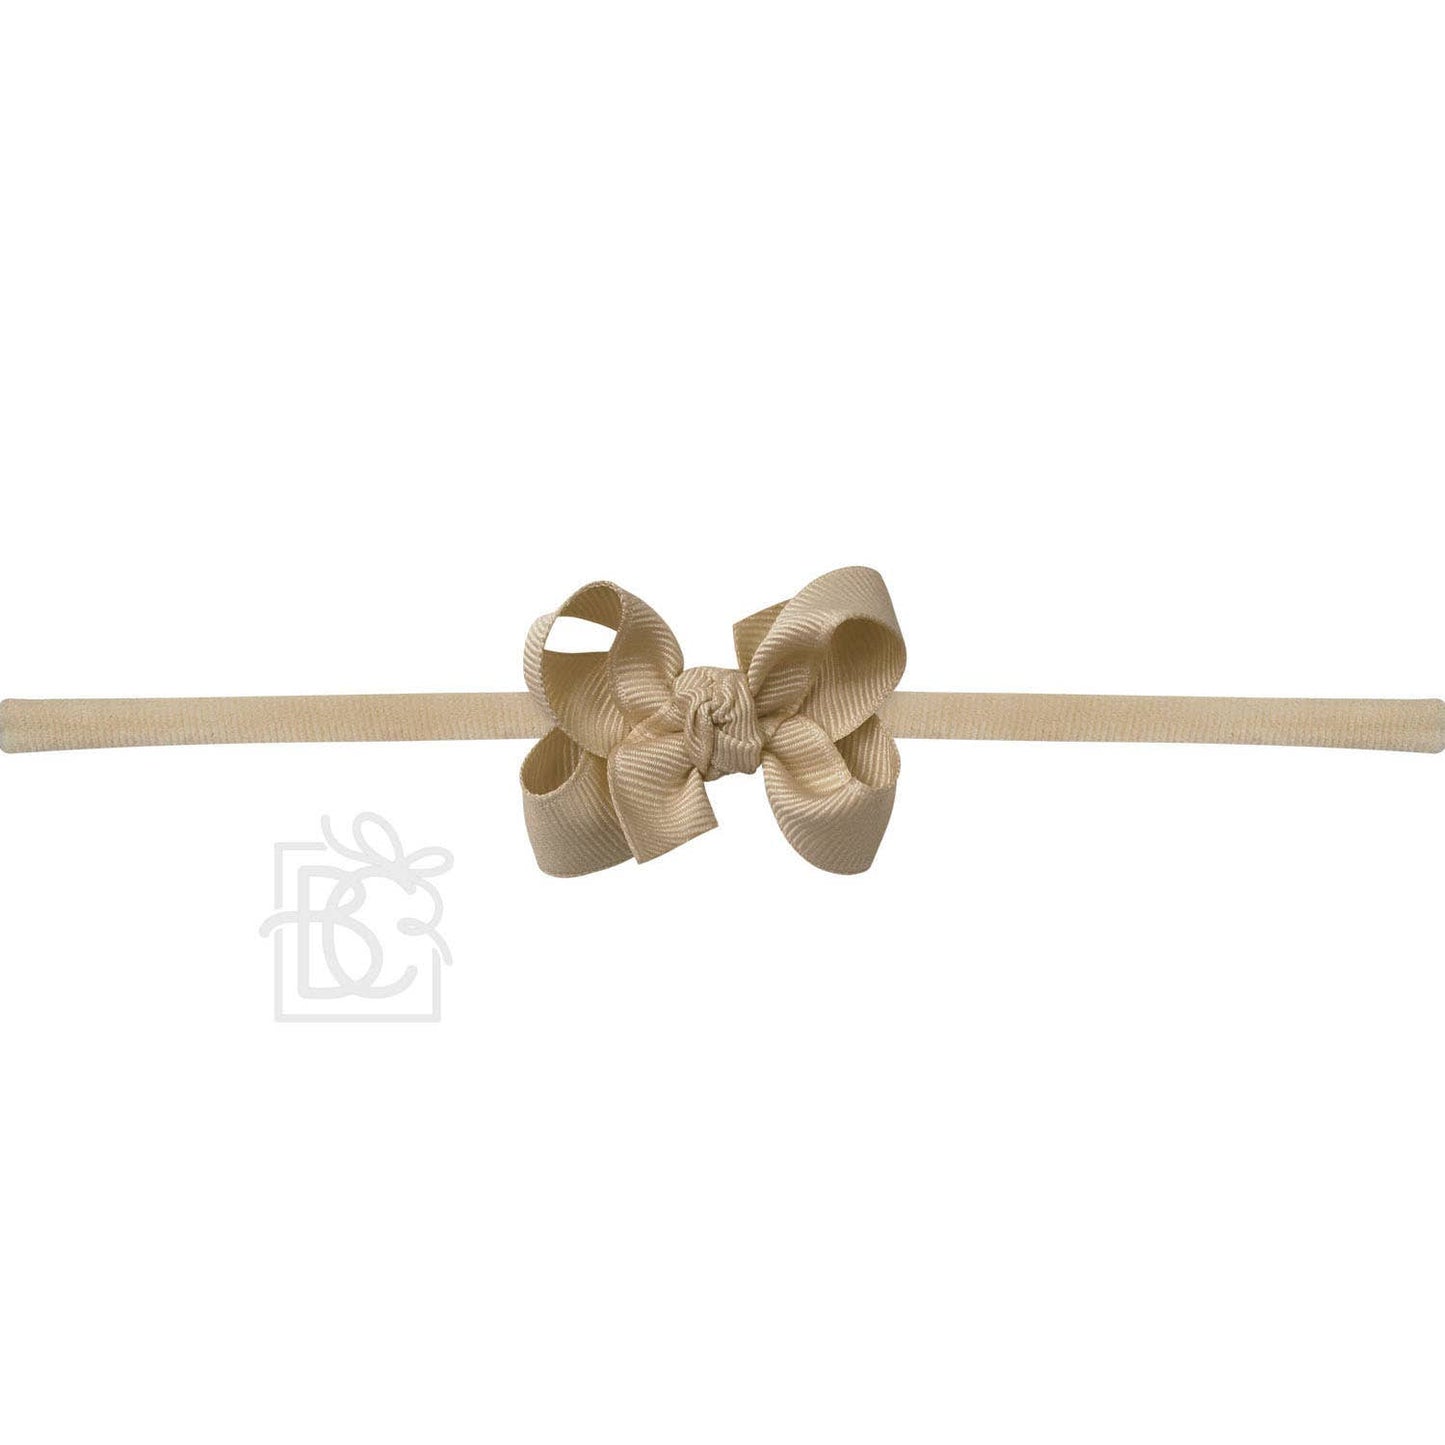 Pantyhose Headband Bow- Cream